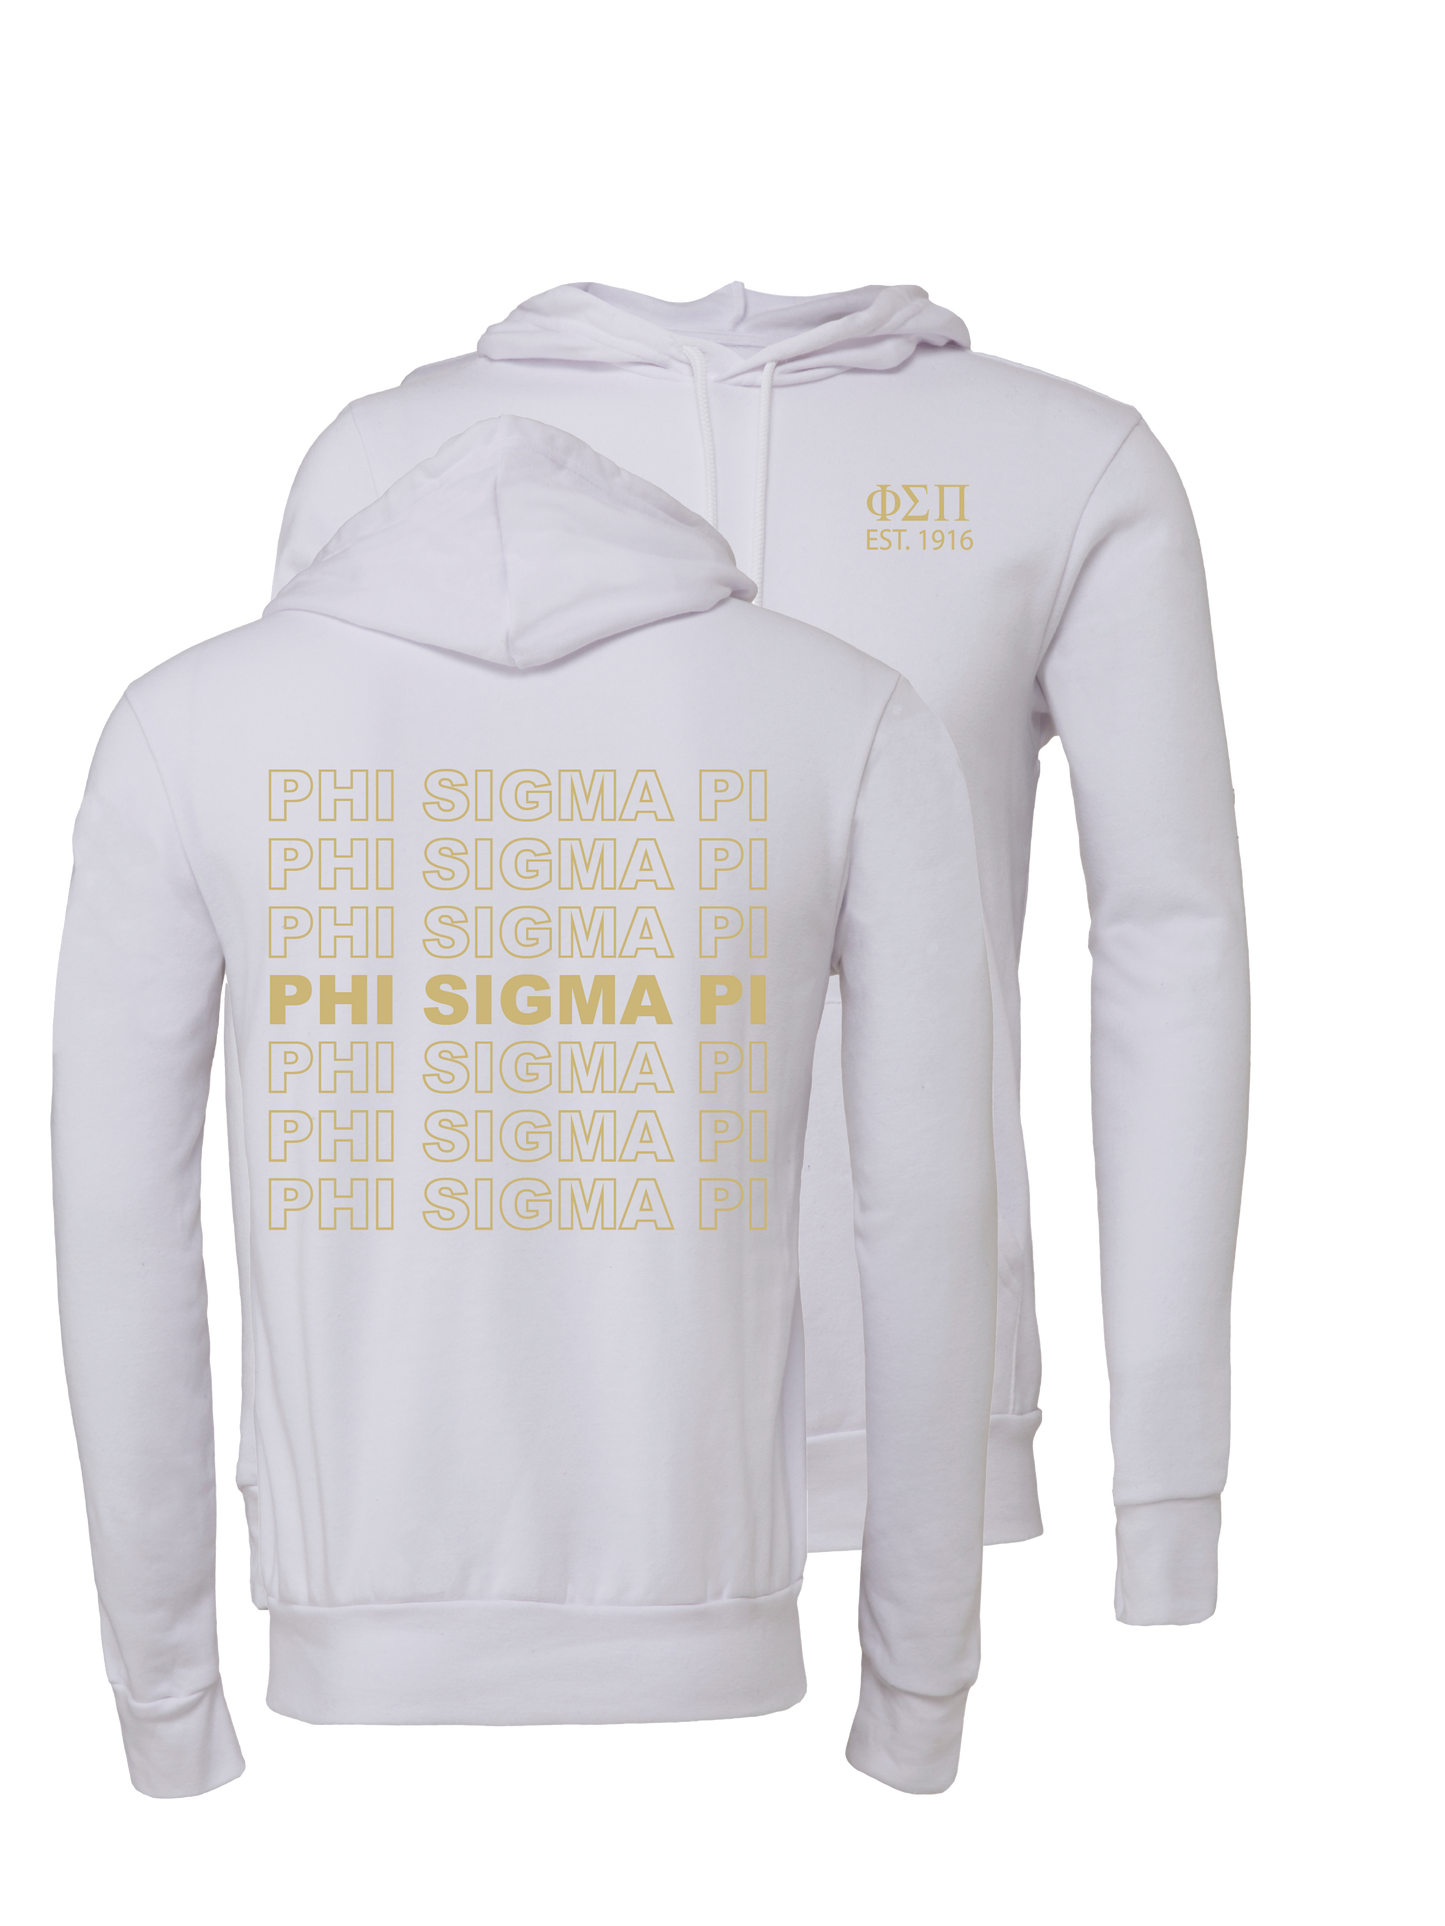 Phi Sigma Pi Repeating Name Hooded Sweatshirts